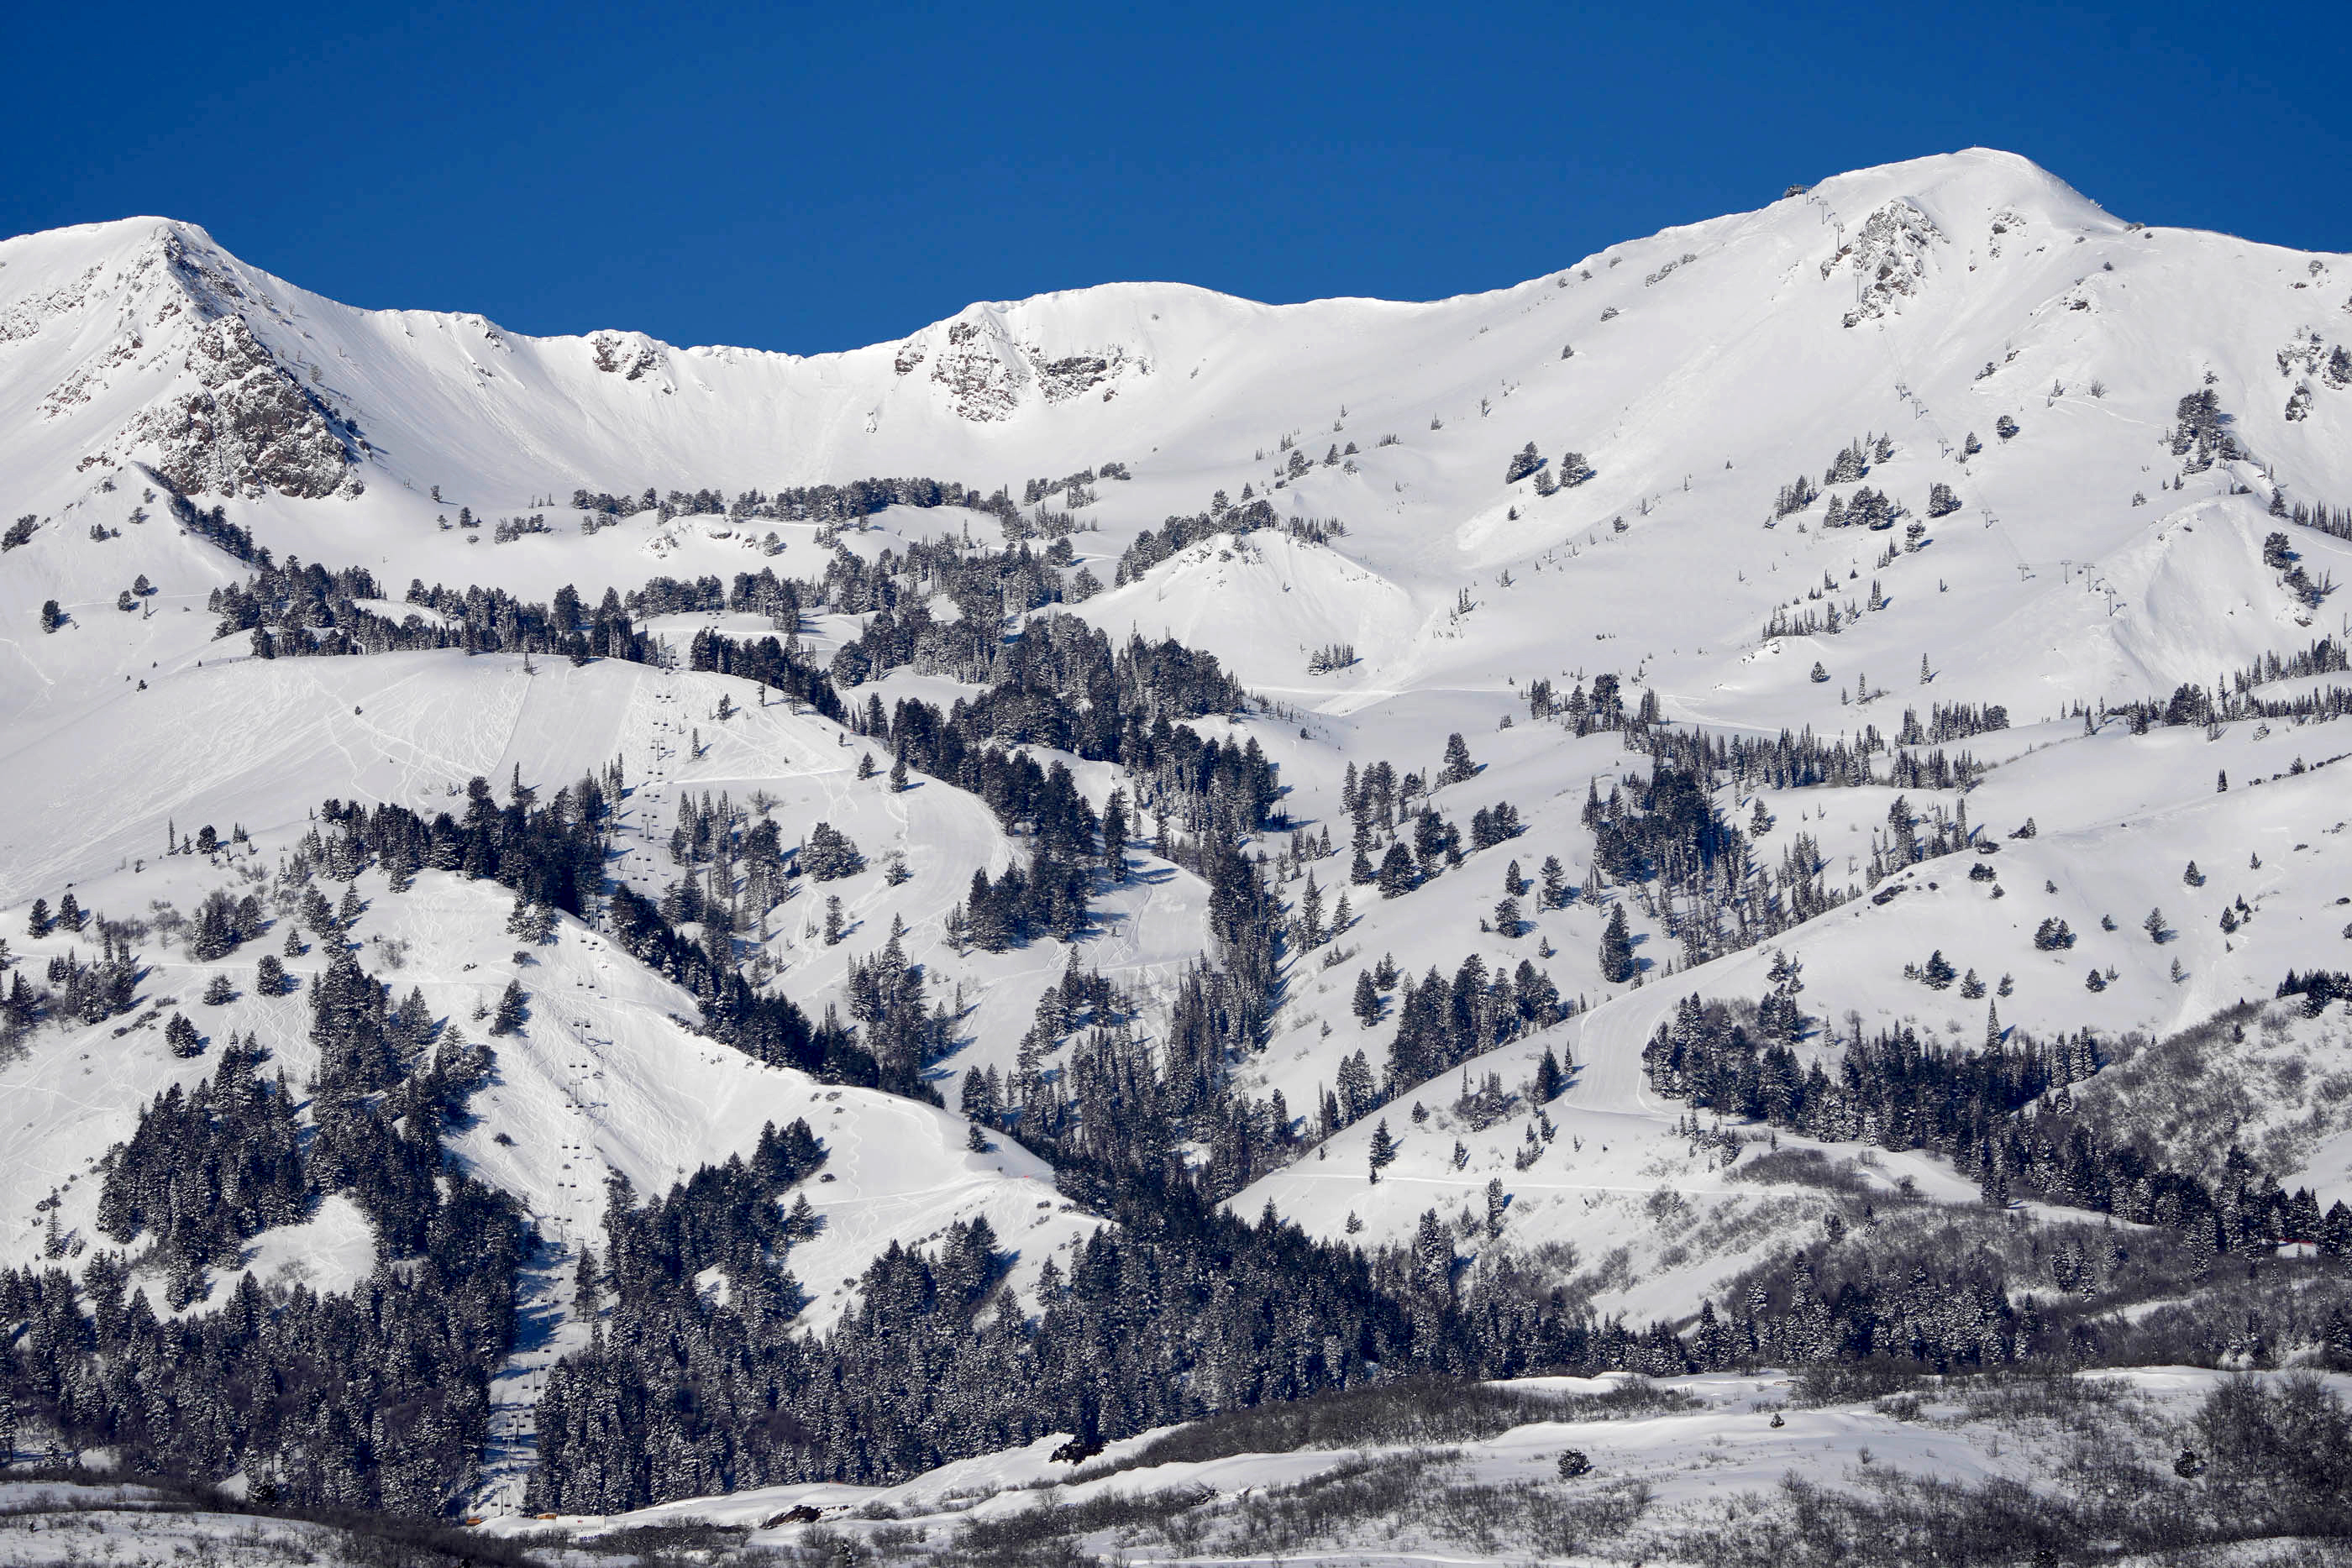 Skiing Utah's newest resort requires $500,000 membership fee and